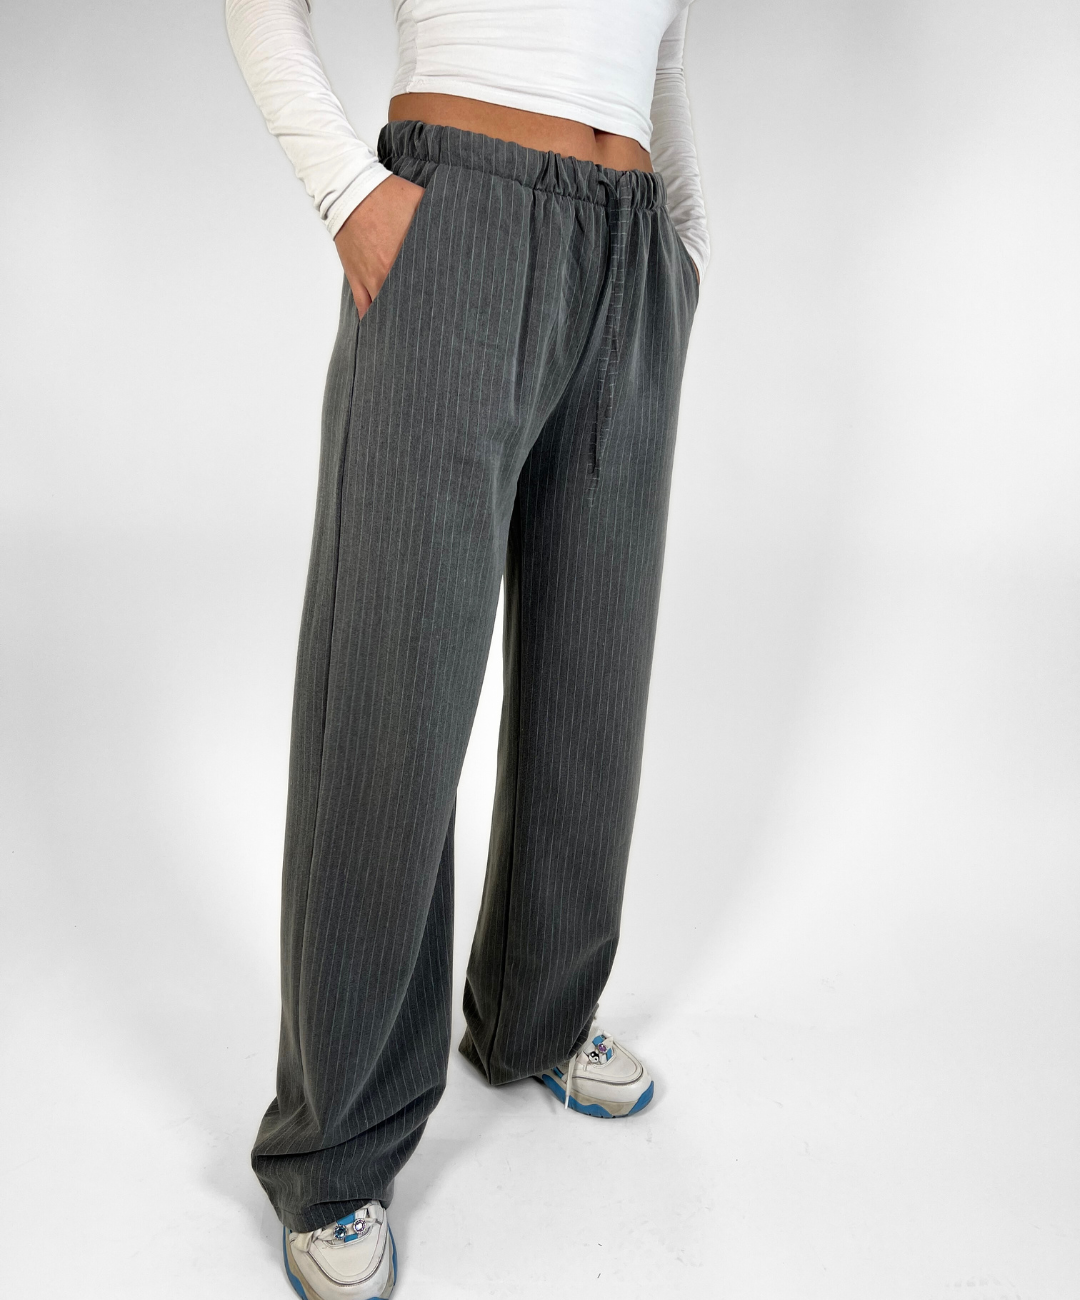 Lize pants Grey Striped | Tall